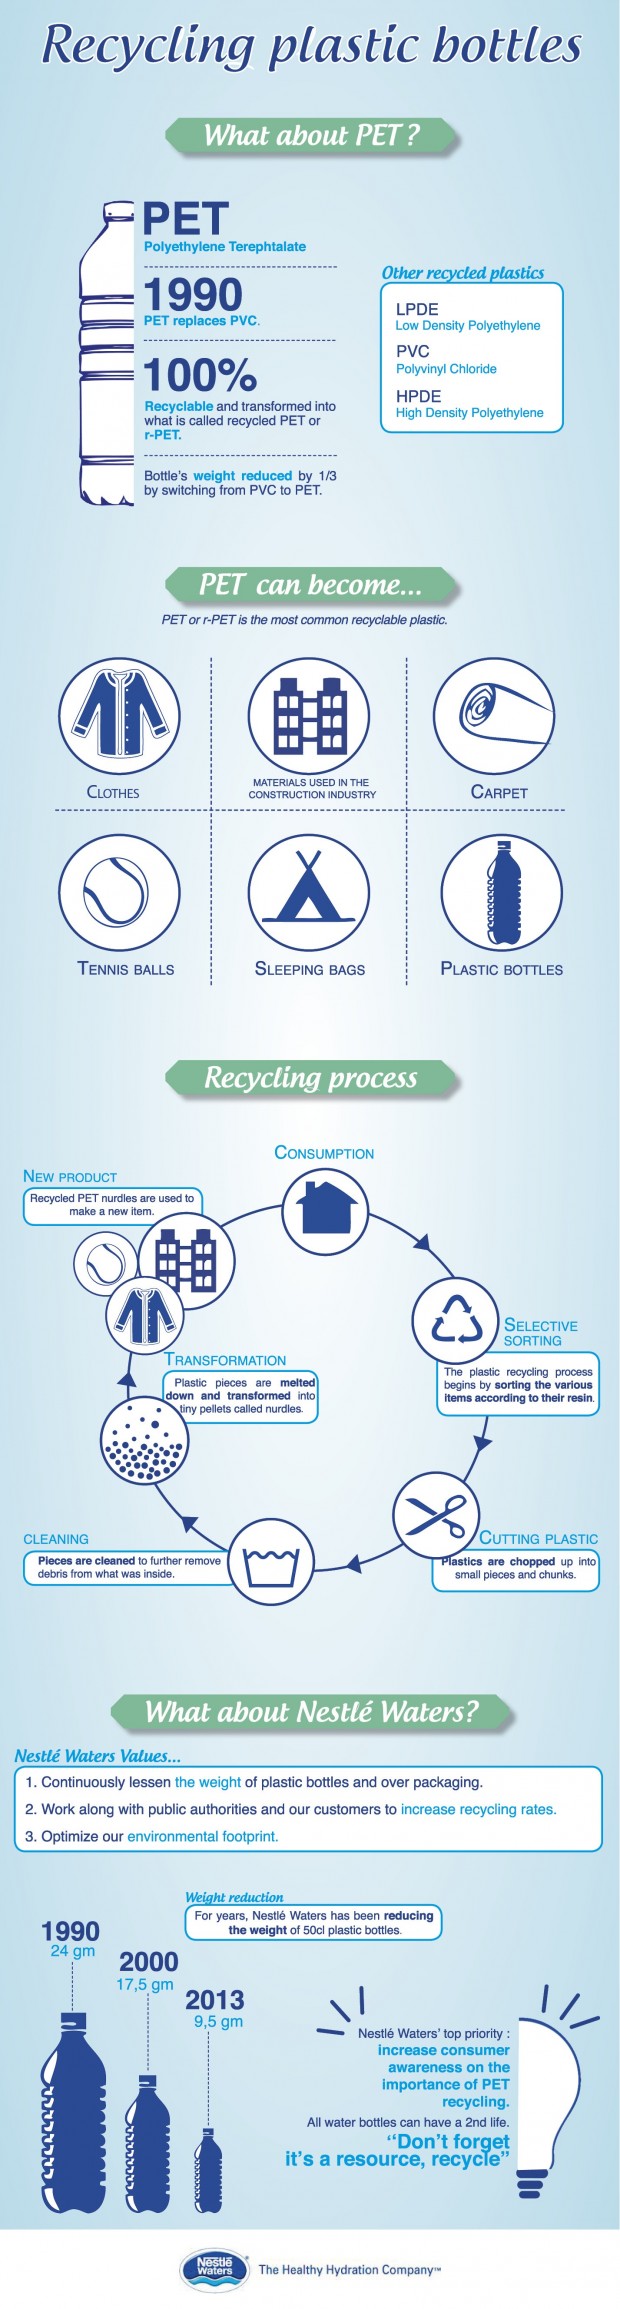 nestle-recycling-plastic-bottles